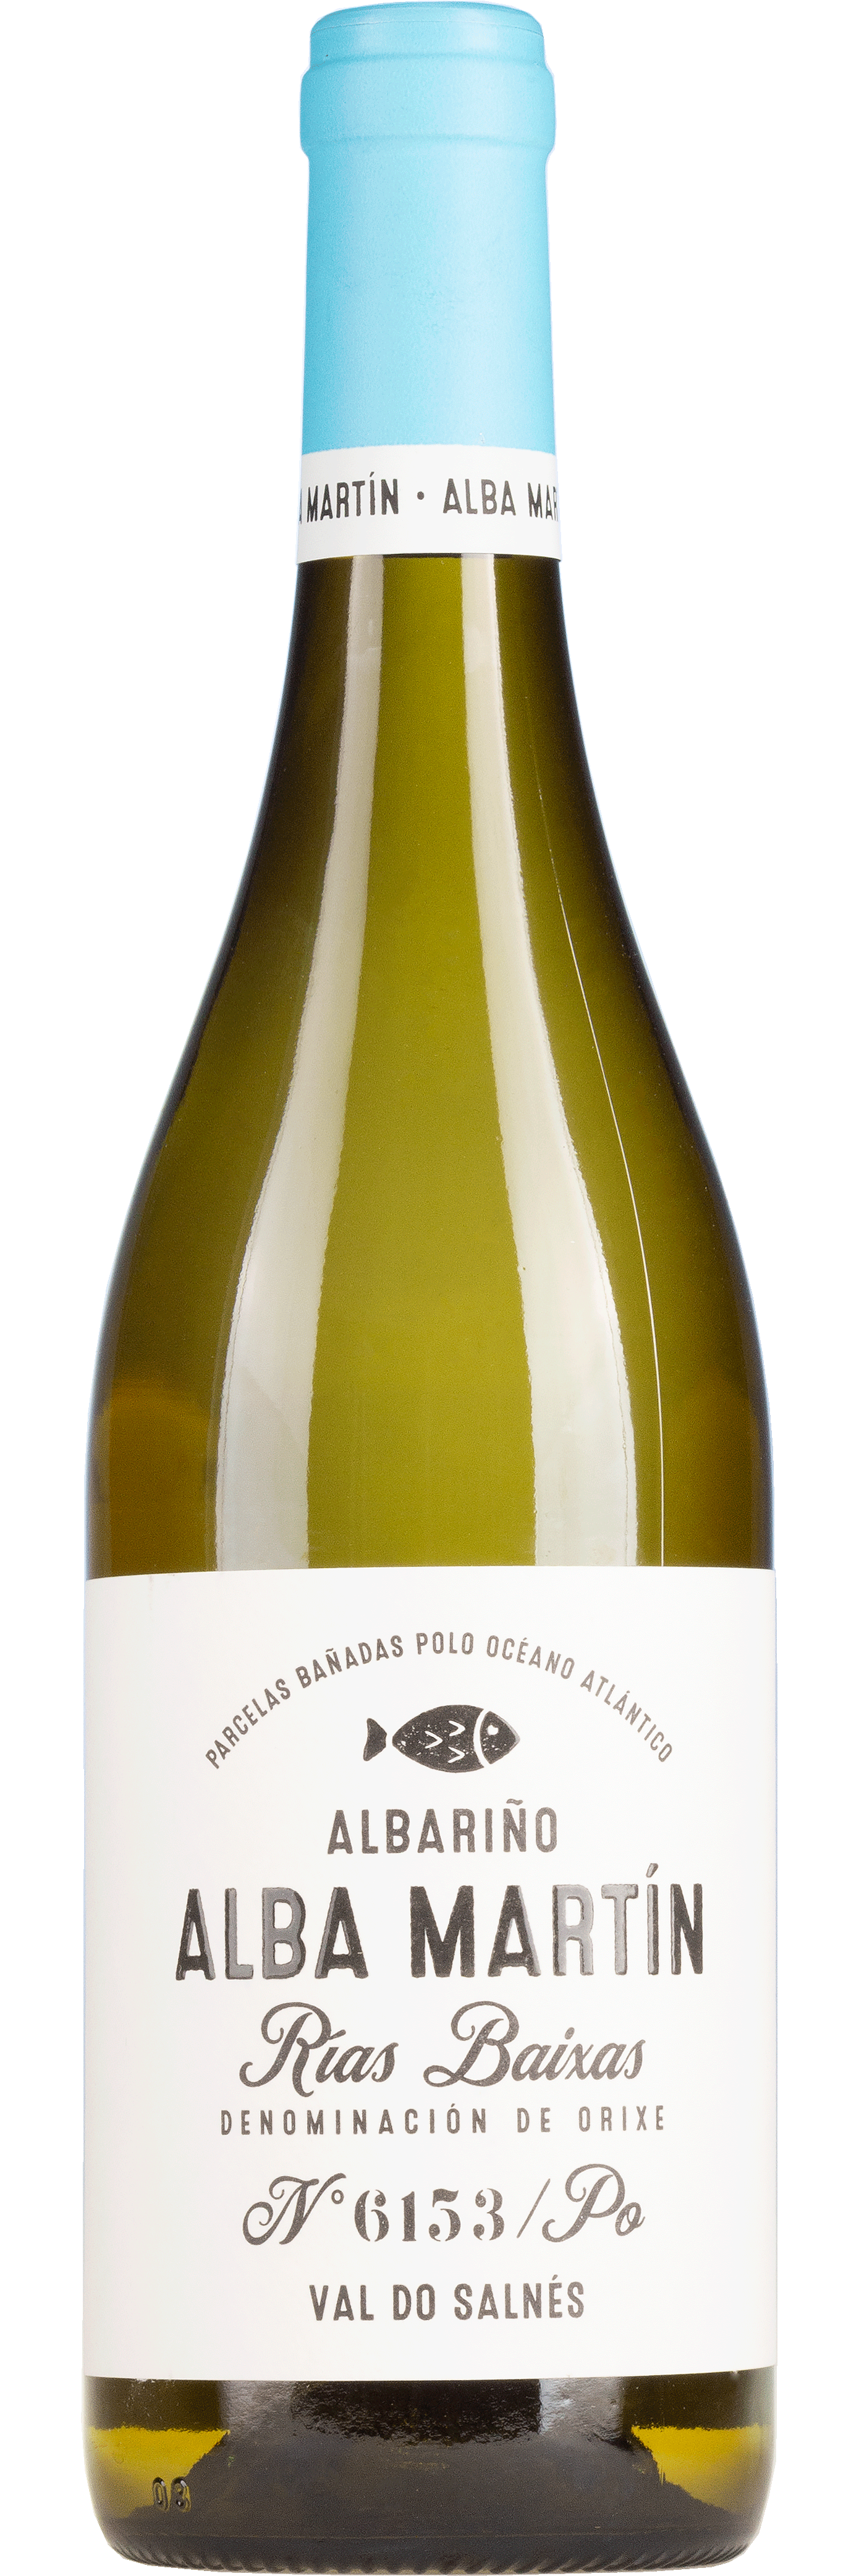 Alba Martin Albarino - Rias Baixas - Weißwein trocken - 0,75l - 12,5% vol.